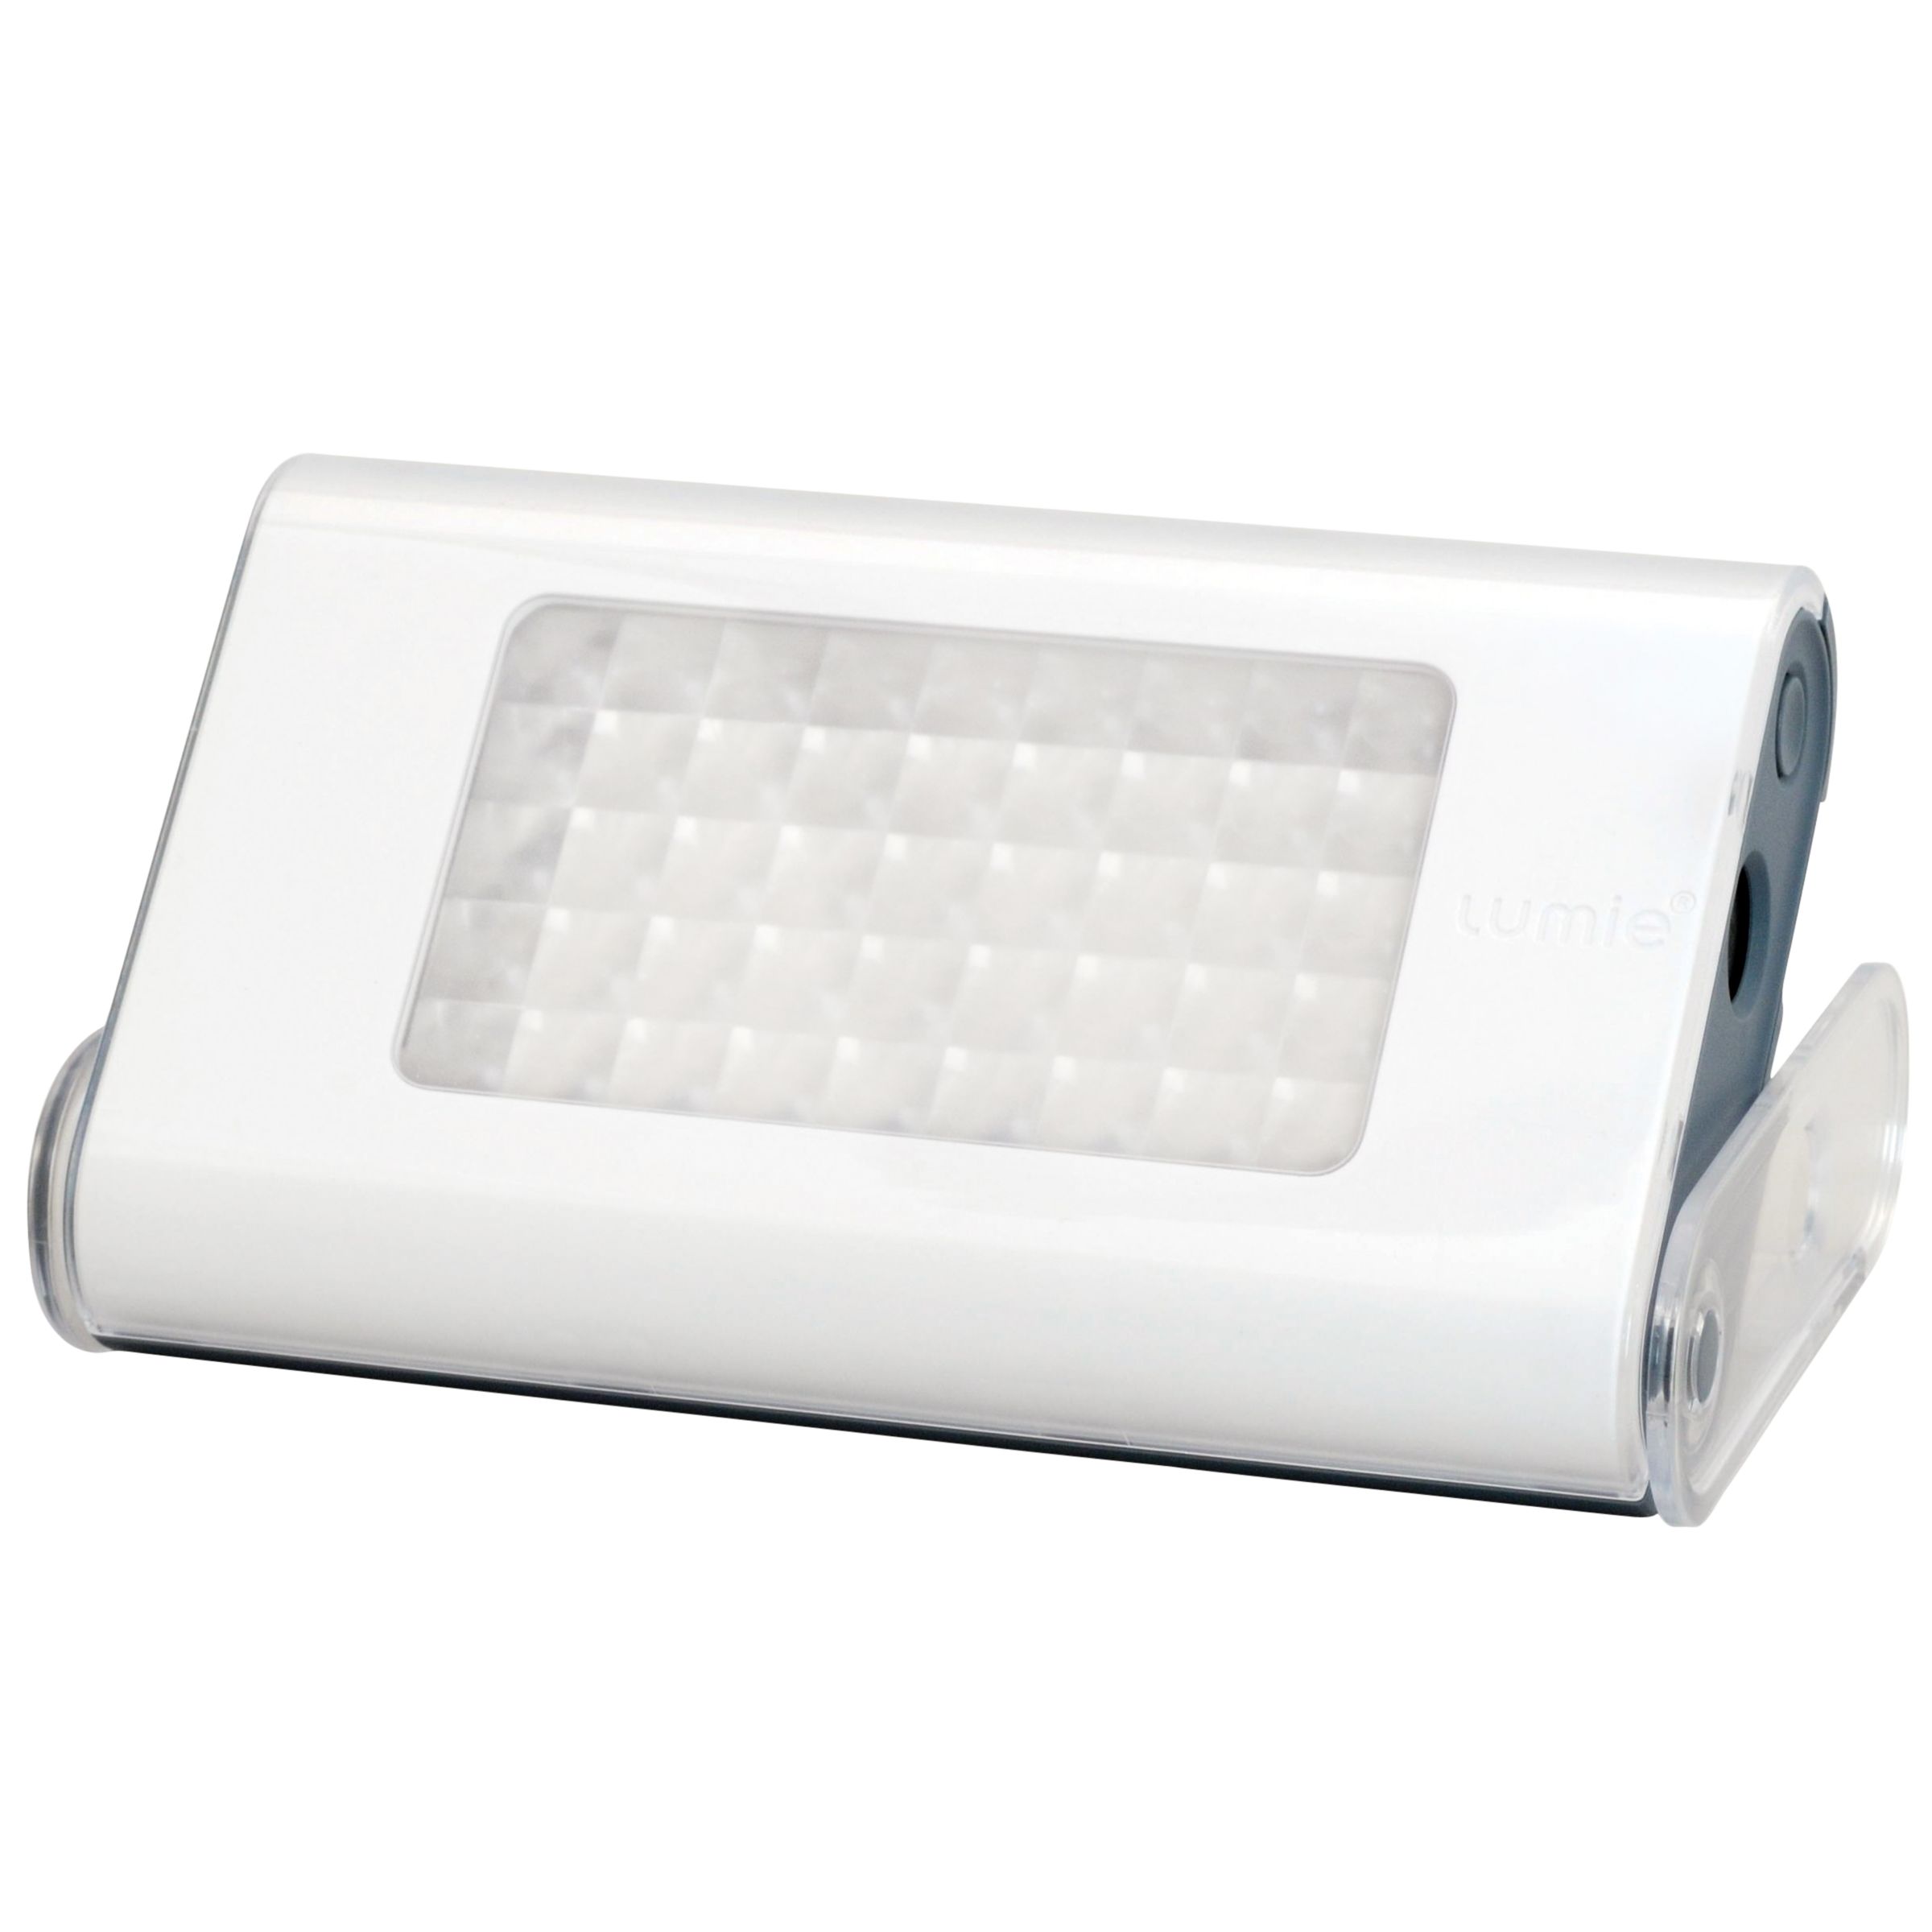 Lumie Zip Portable Light Box 151981